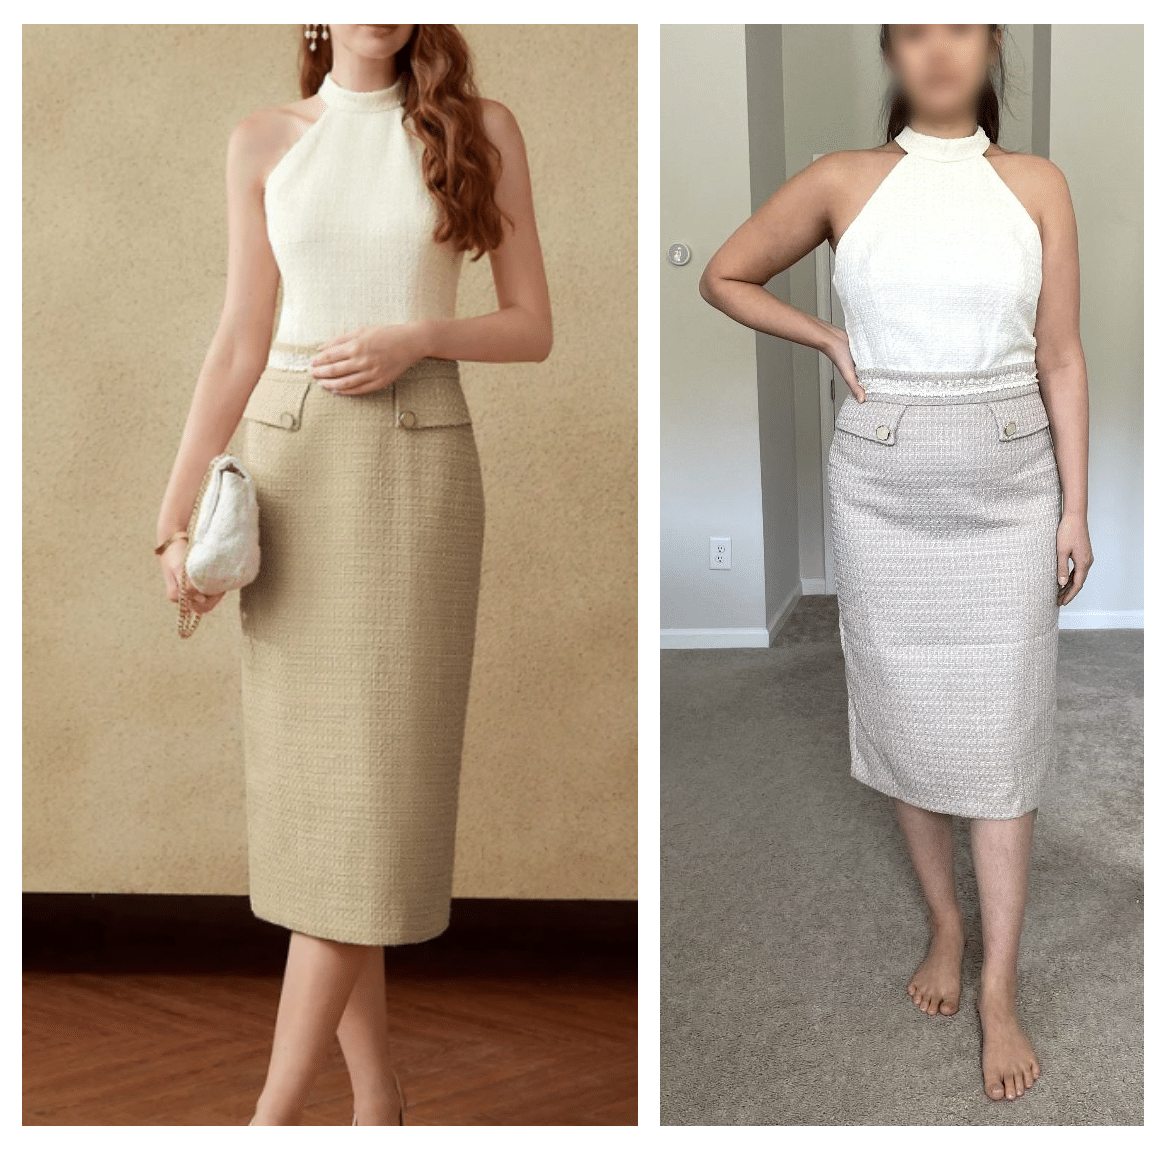 motf dress comparison